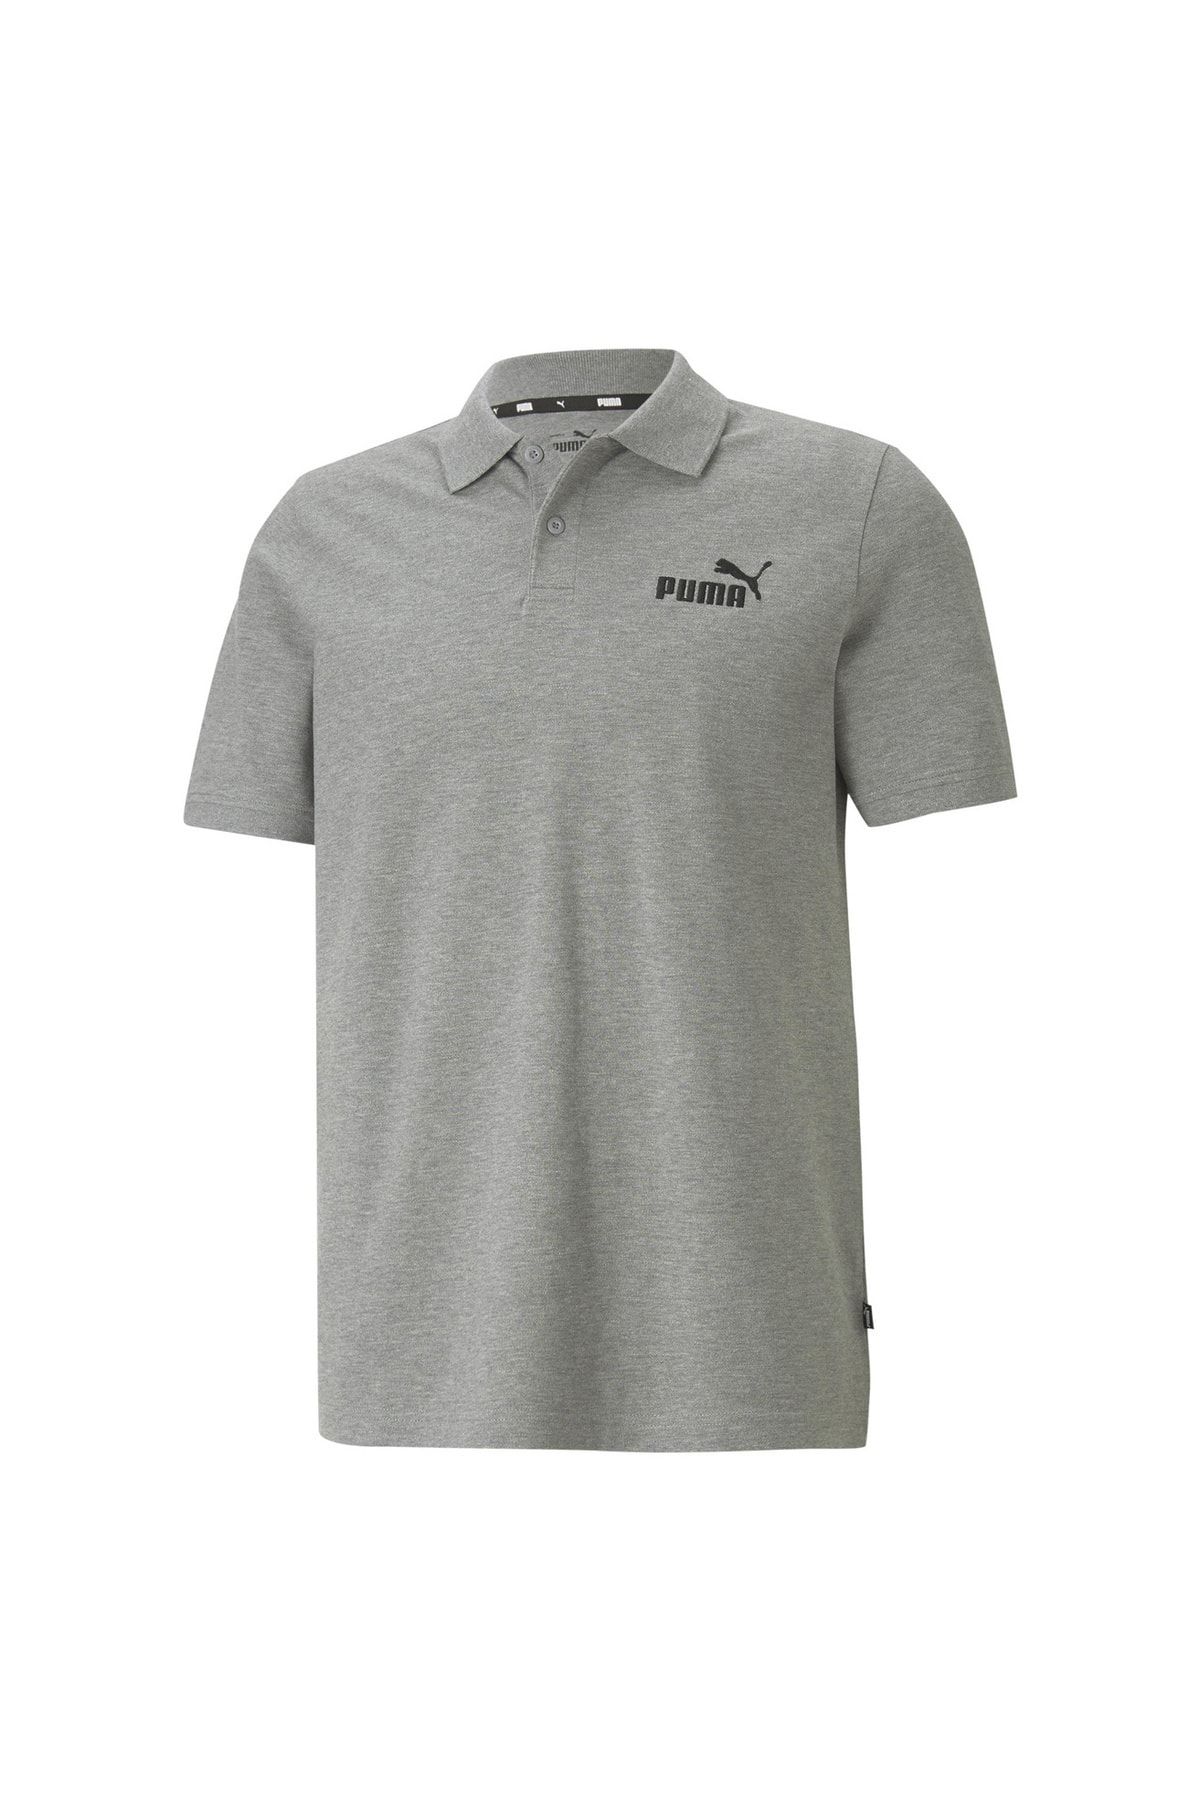 G Puma Gray Polo Trendyol Plain T-Shirt ESS Neck Men\'s Medium - 58667403 Pique Round